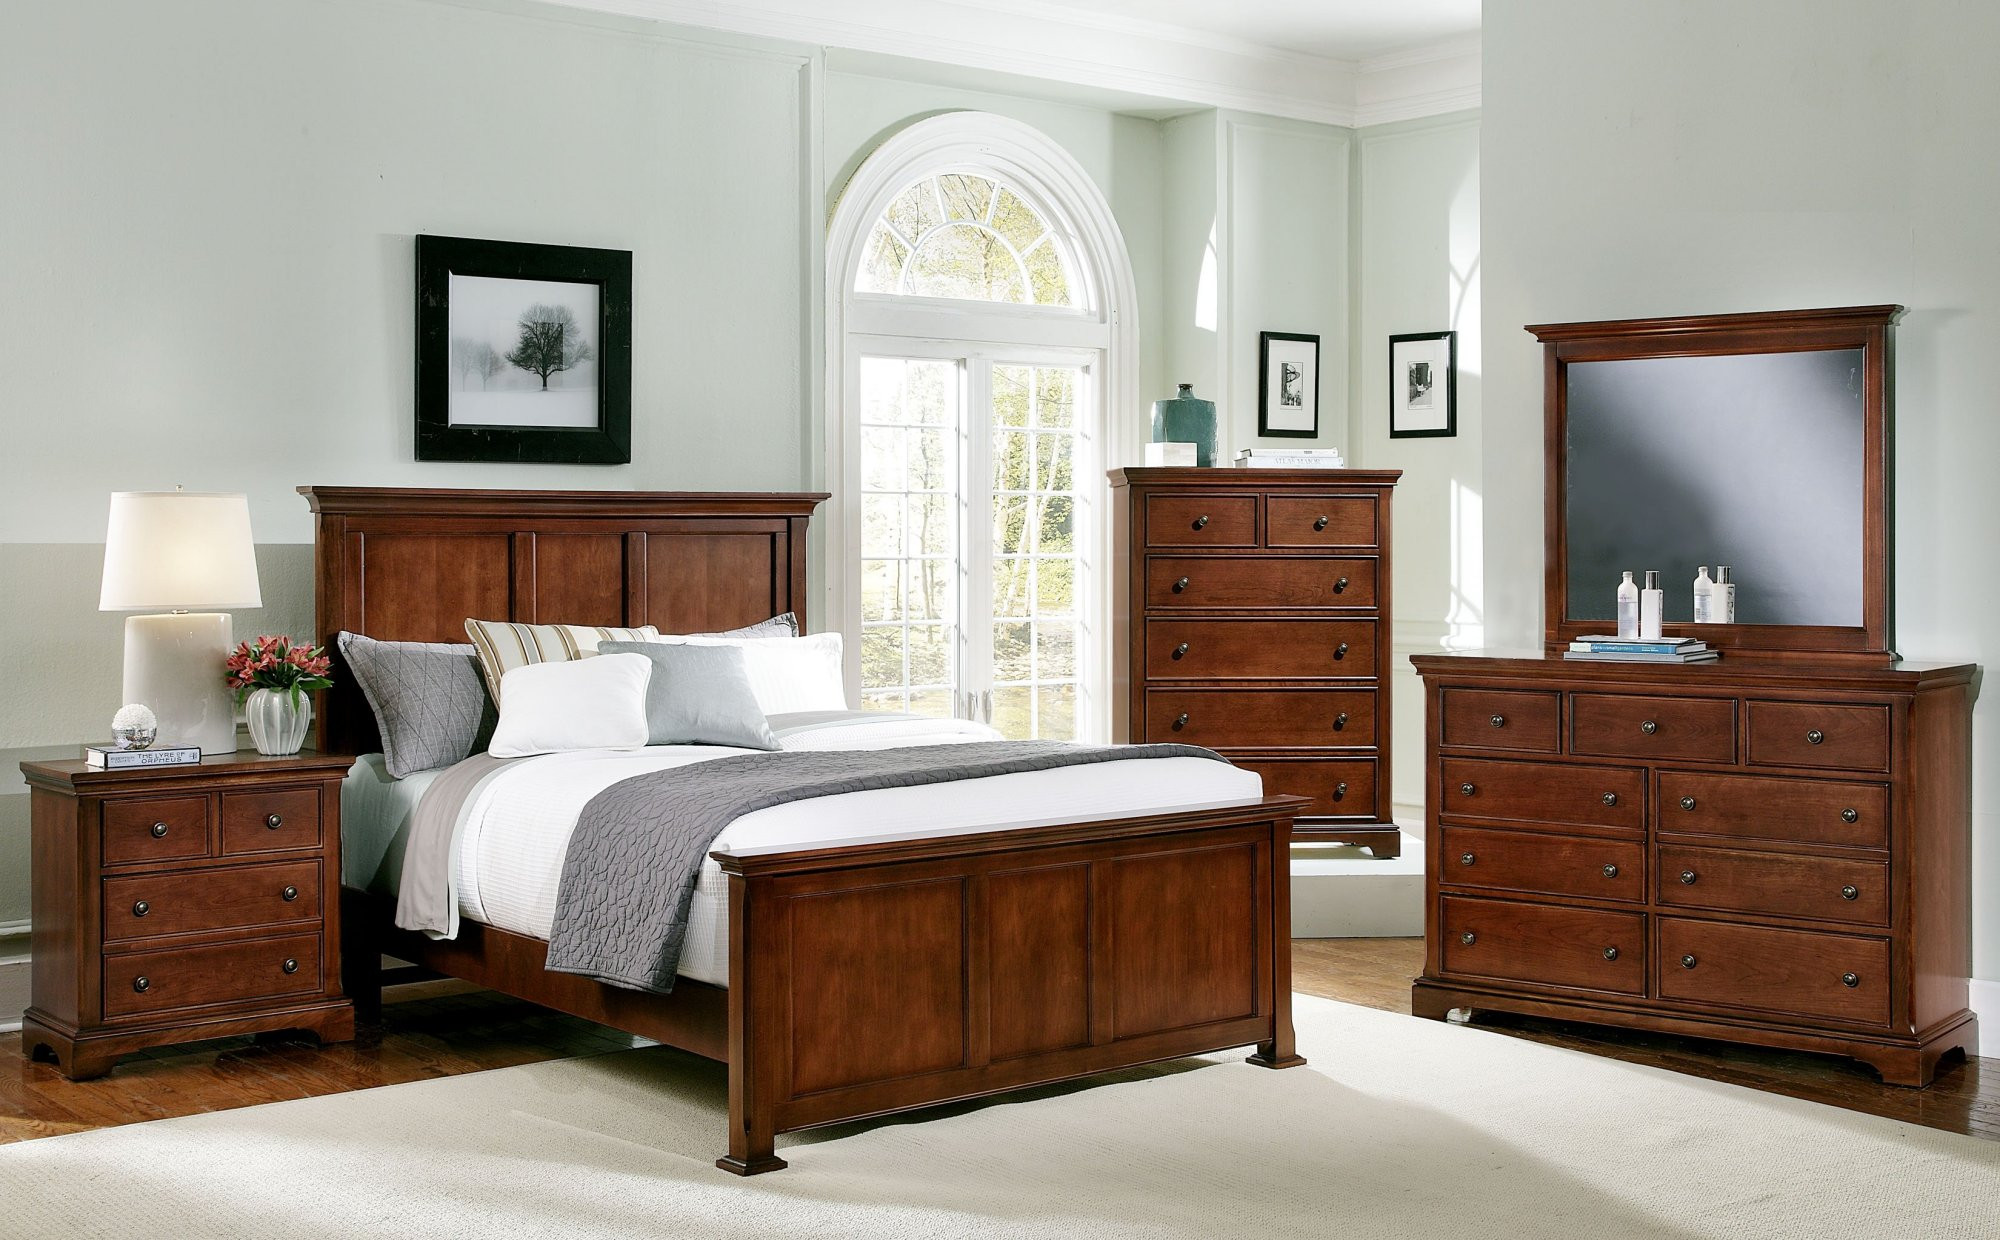 Best ideas about Bassett Bedroom Furniture
. Save or Pin Bassett Bedroom Furniture Now.